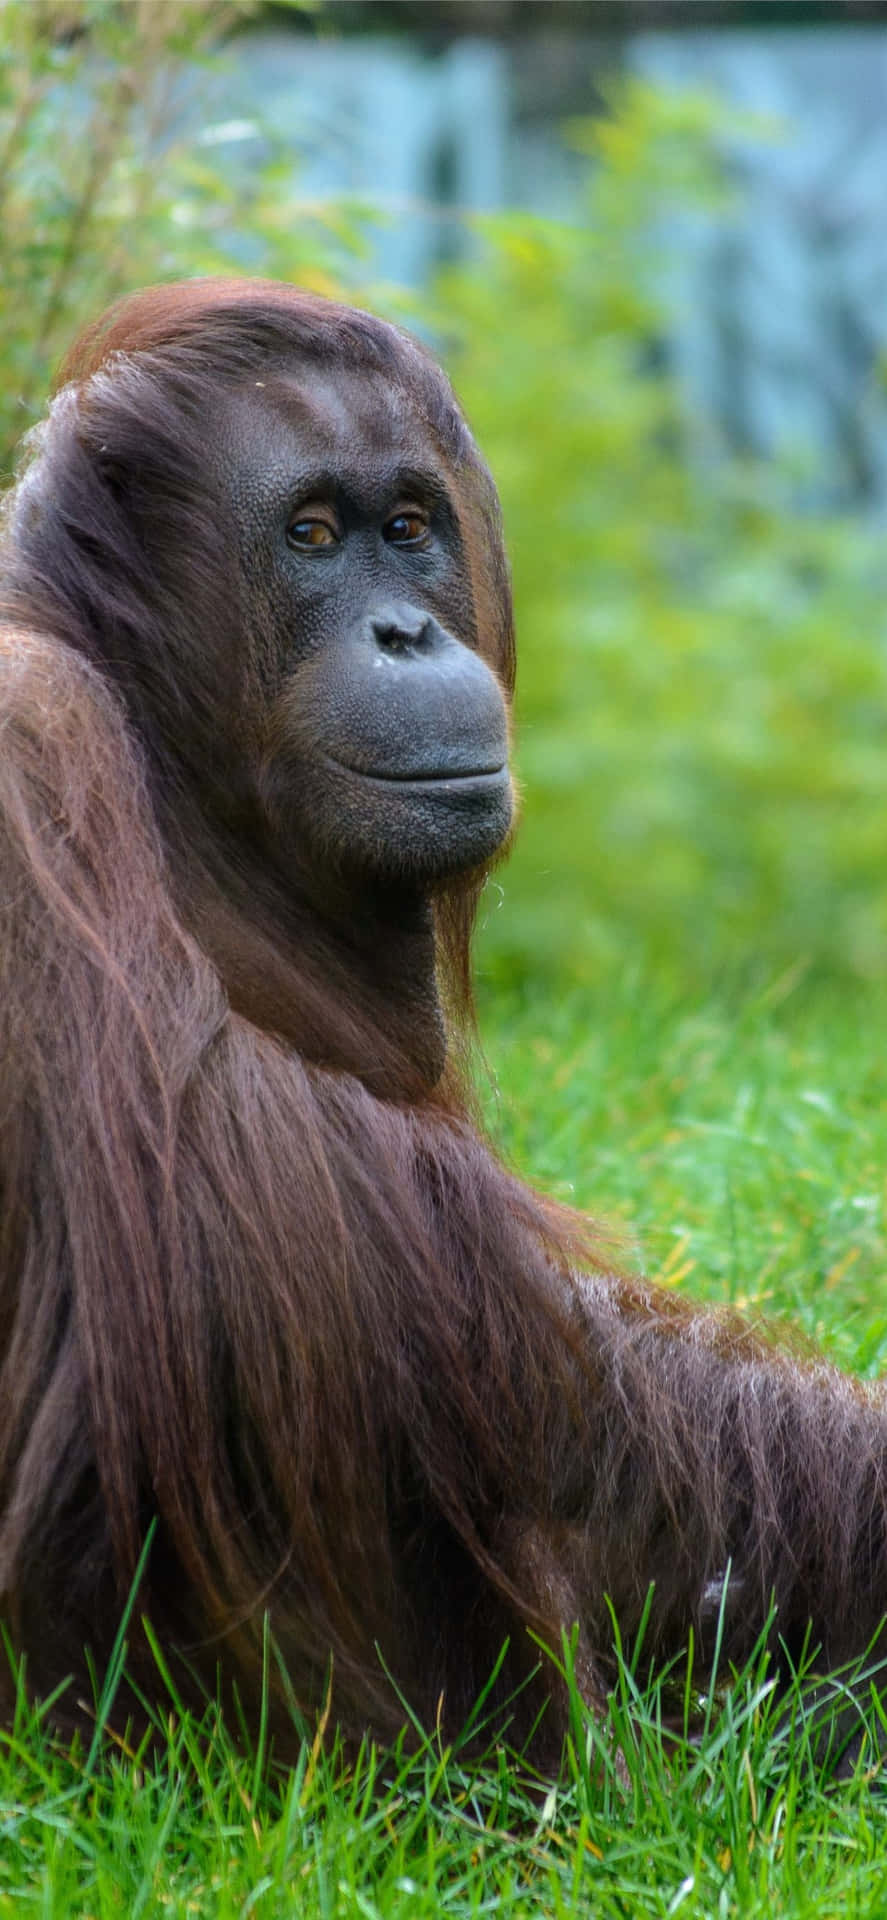 Storslagenapa I Naturen: Orangutang. Wallpaper